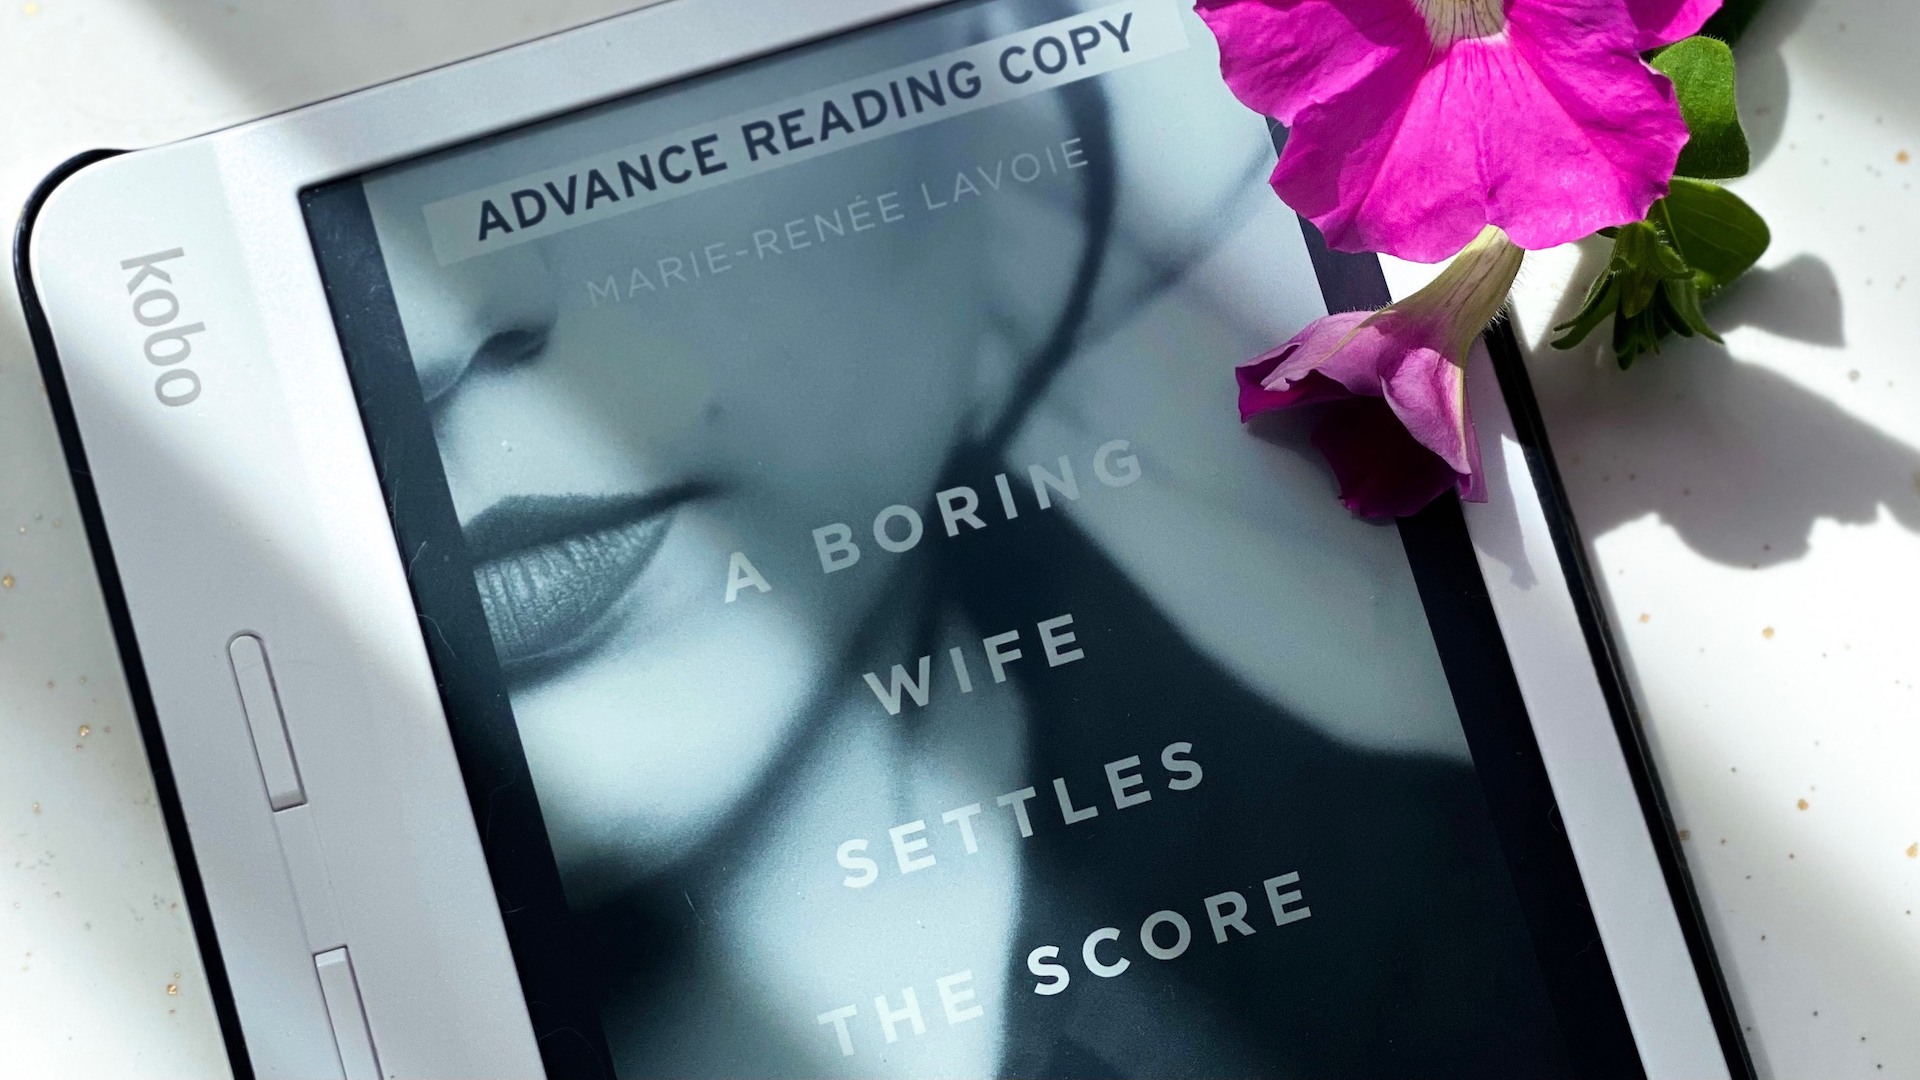 70: A Boring Wife Settles the Score by Marie-Renée Lavoie